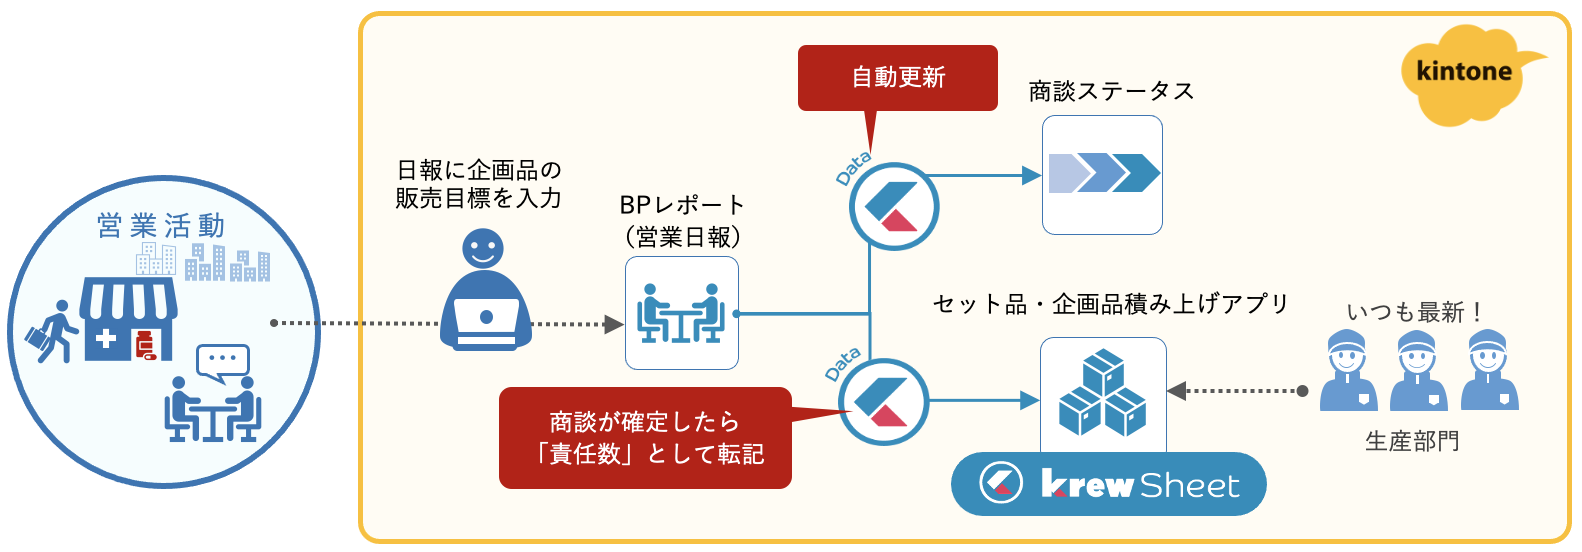 BPレポートとセット品・企画品積み上げアプリの概念図